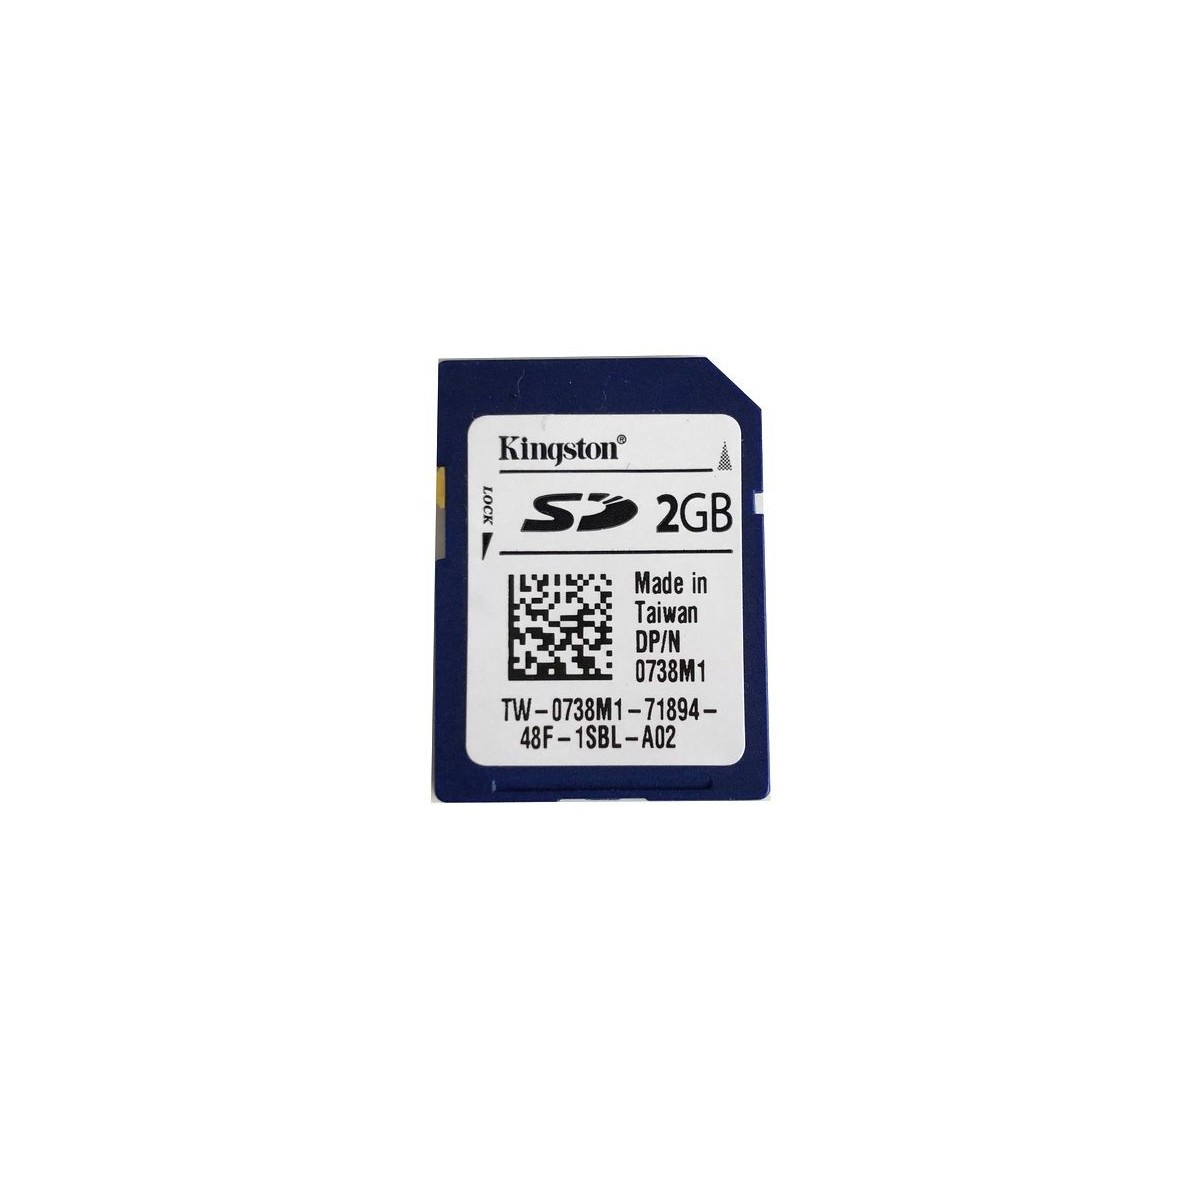 DELL iDRAC 6 vFLASH 2GB 0738M1